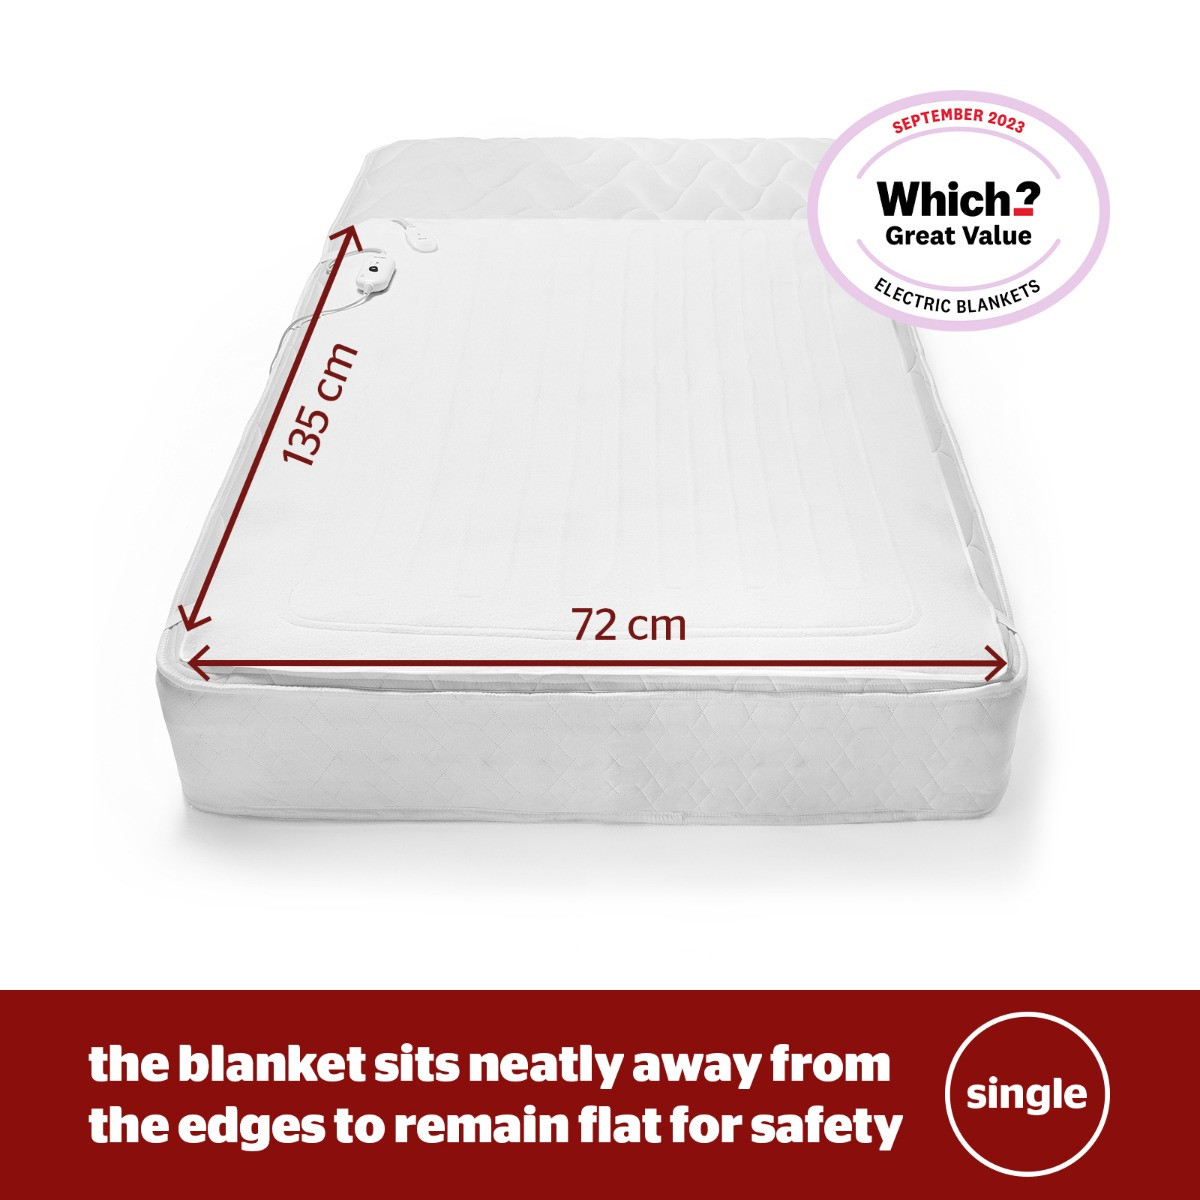 Silentnight Comfort Control Electric Blanket>